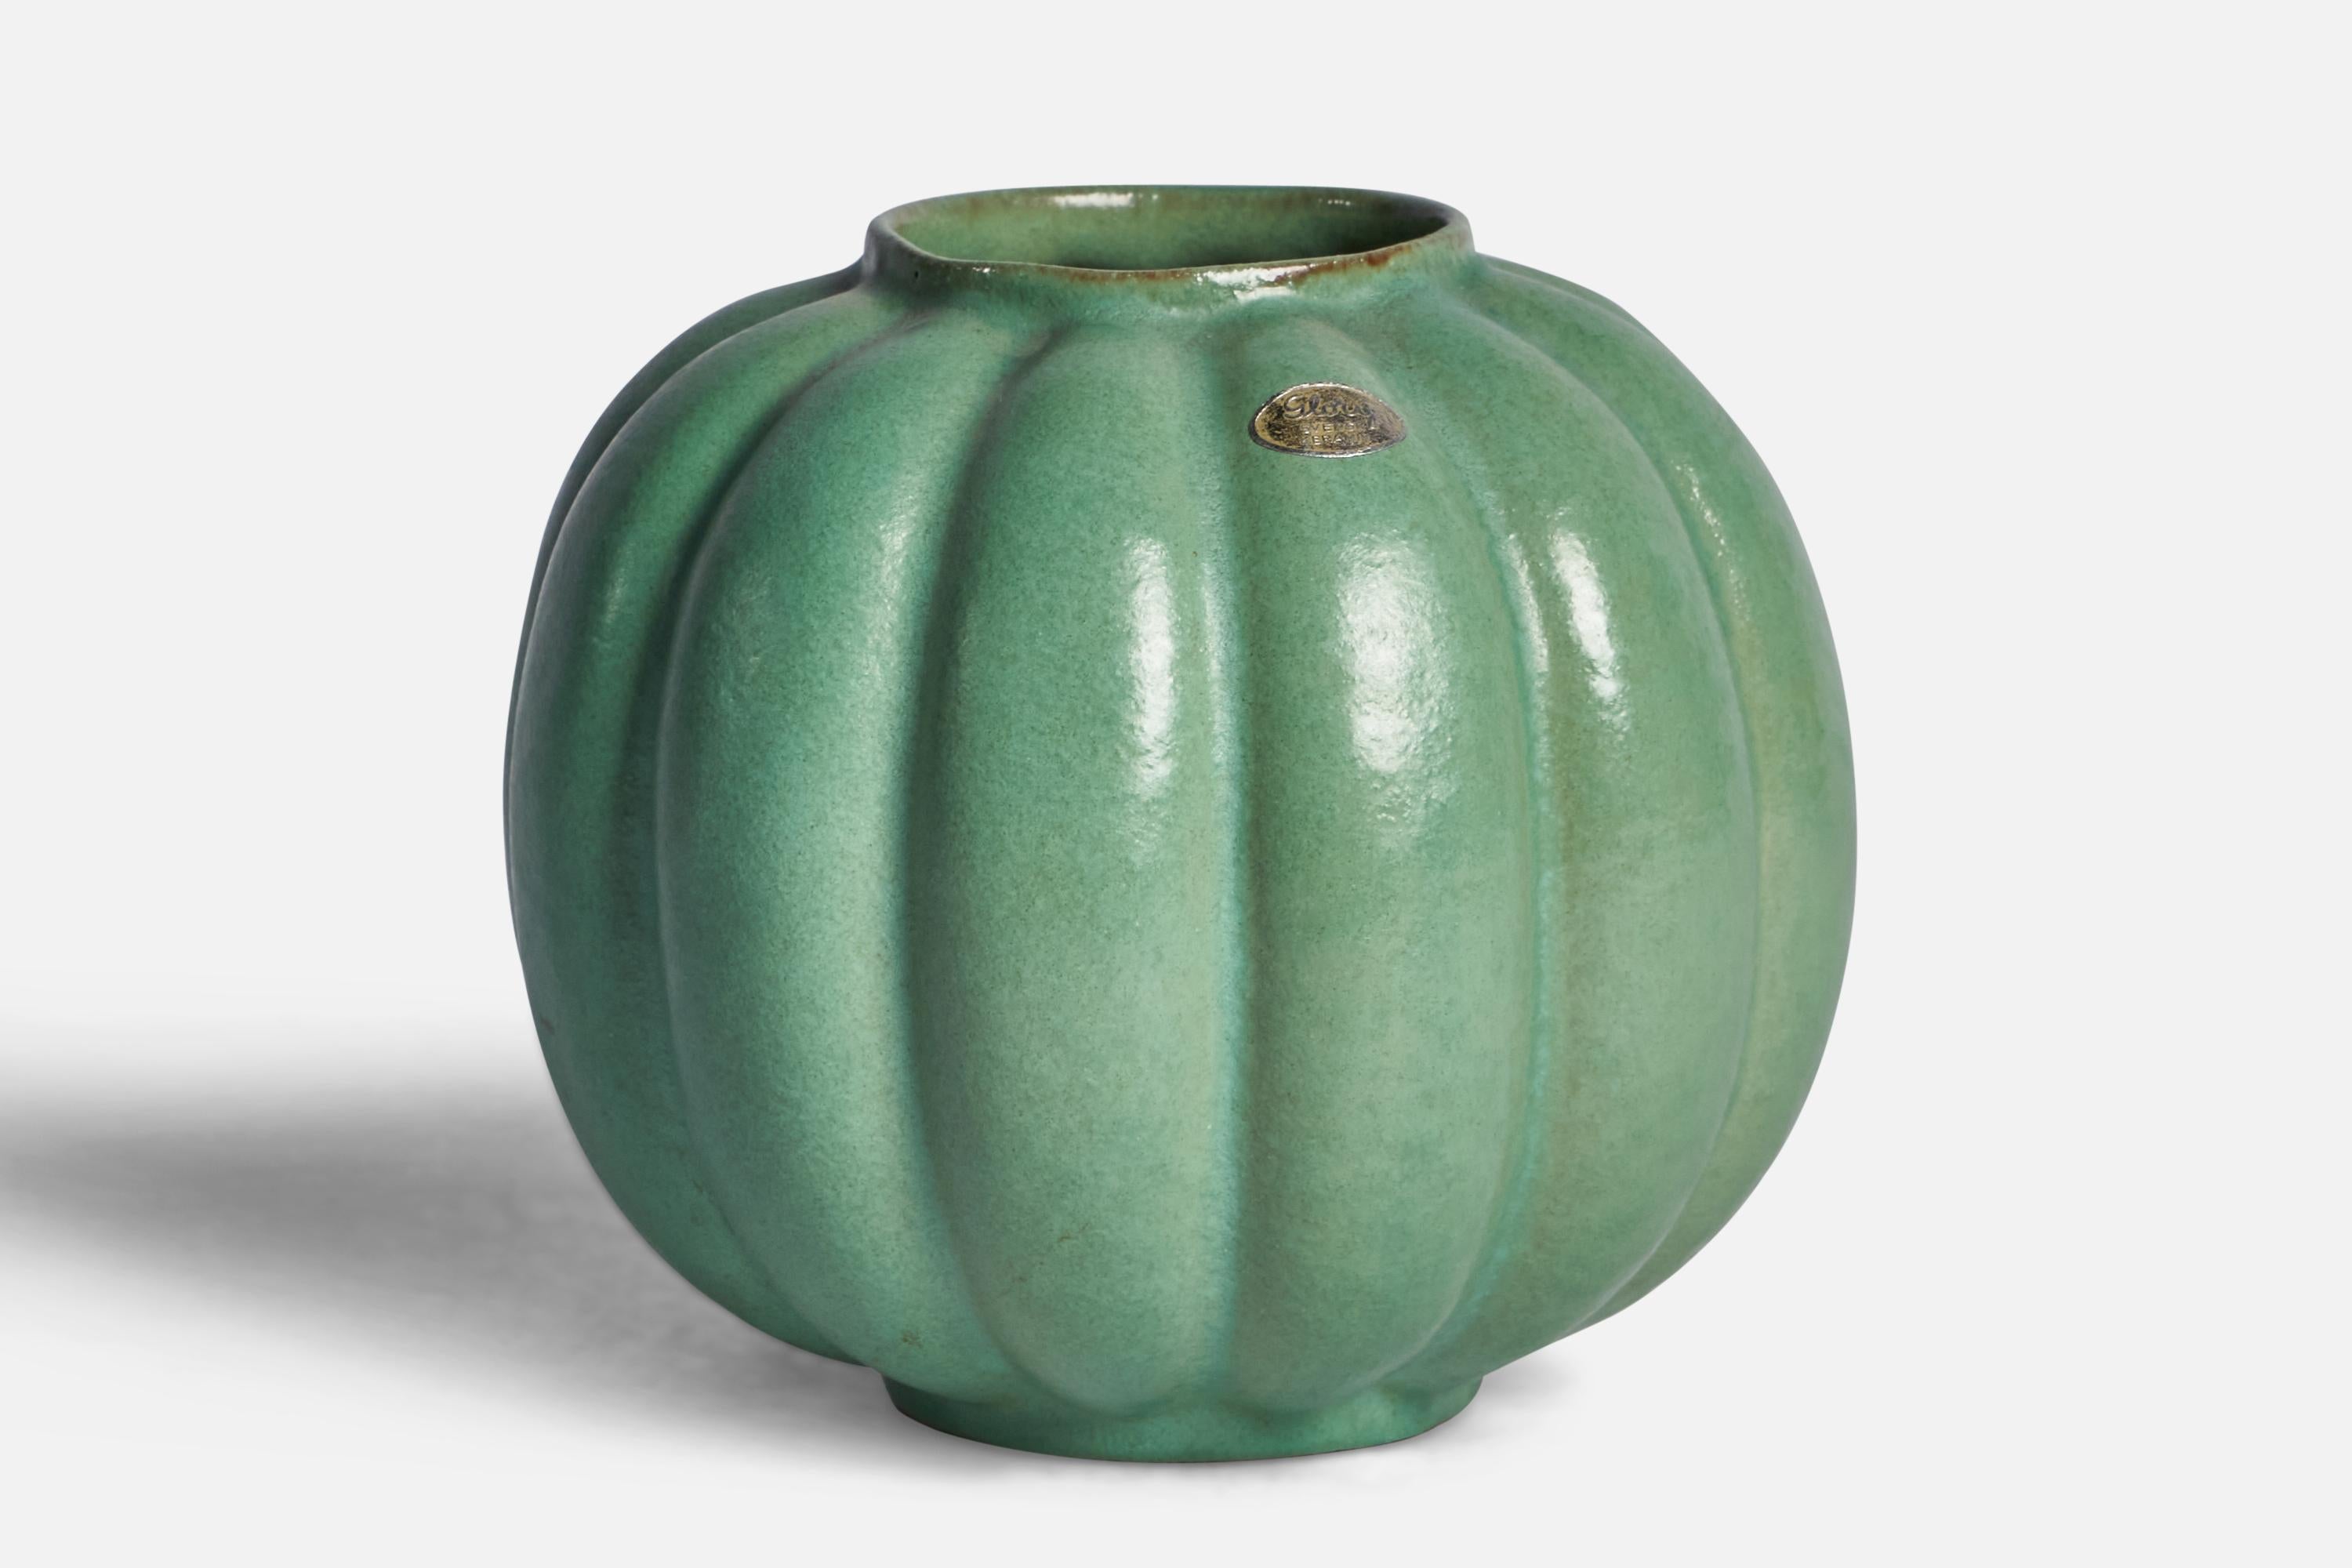 A green-glazed earthenware vase designed and produced by Upsala Ekeby, Sweden, c. 1930s.